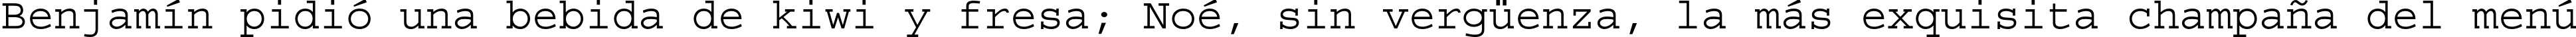 Пример написания шрифтом Courier Std Medium текста на испанском